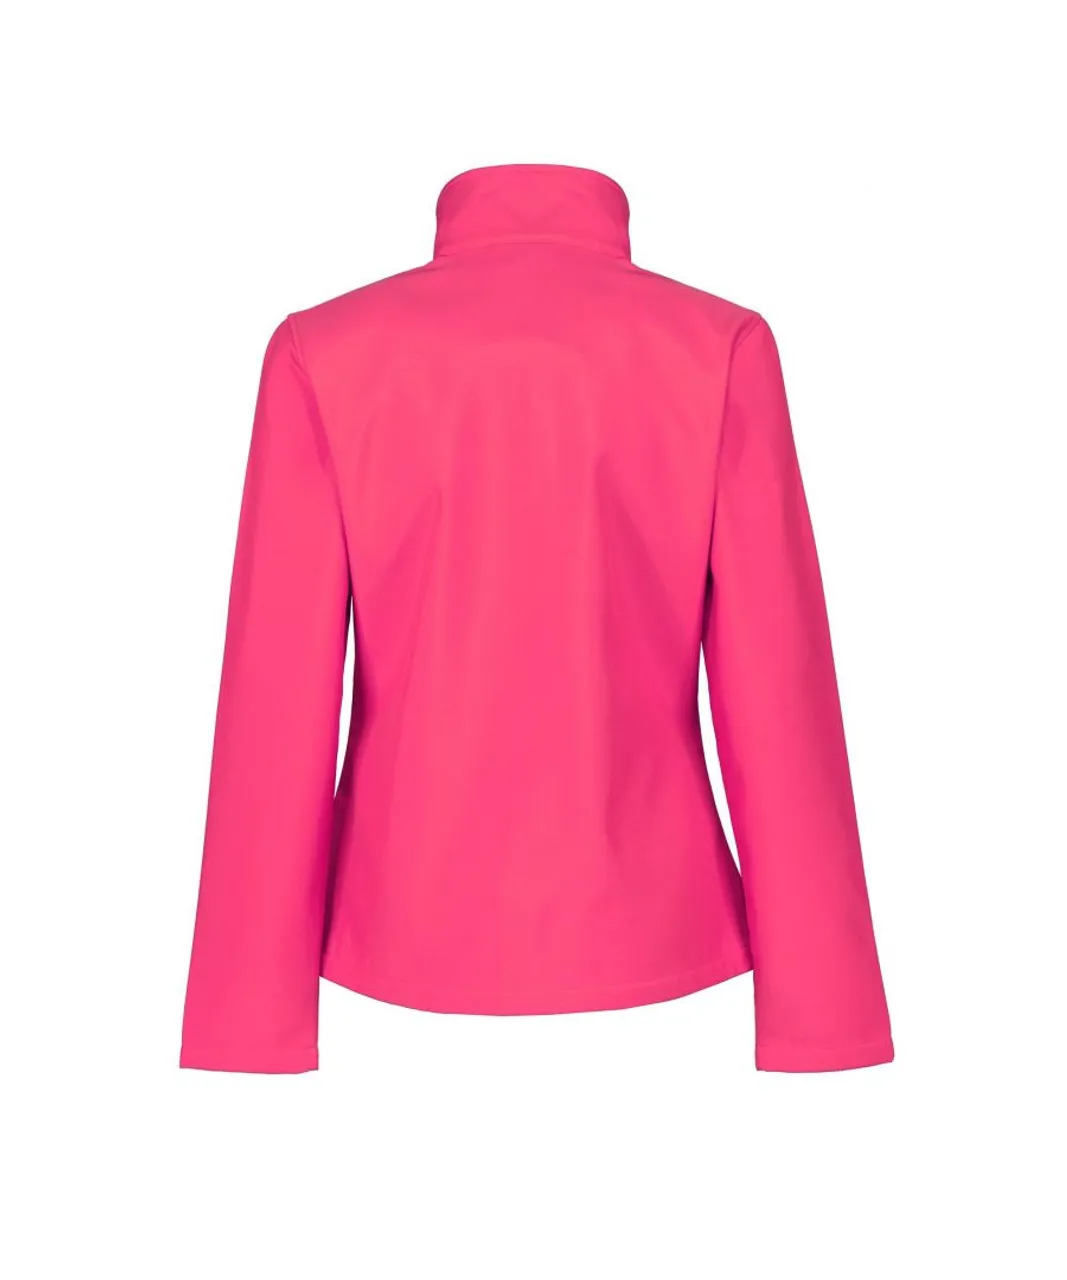 Regatta Standout Womens/Ladies Ablaze Printable Soft Shell Jacket - Pink